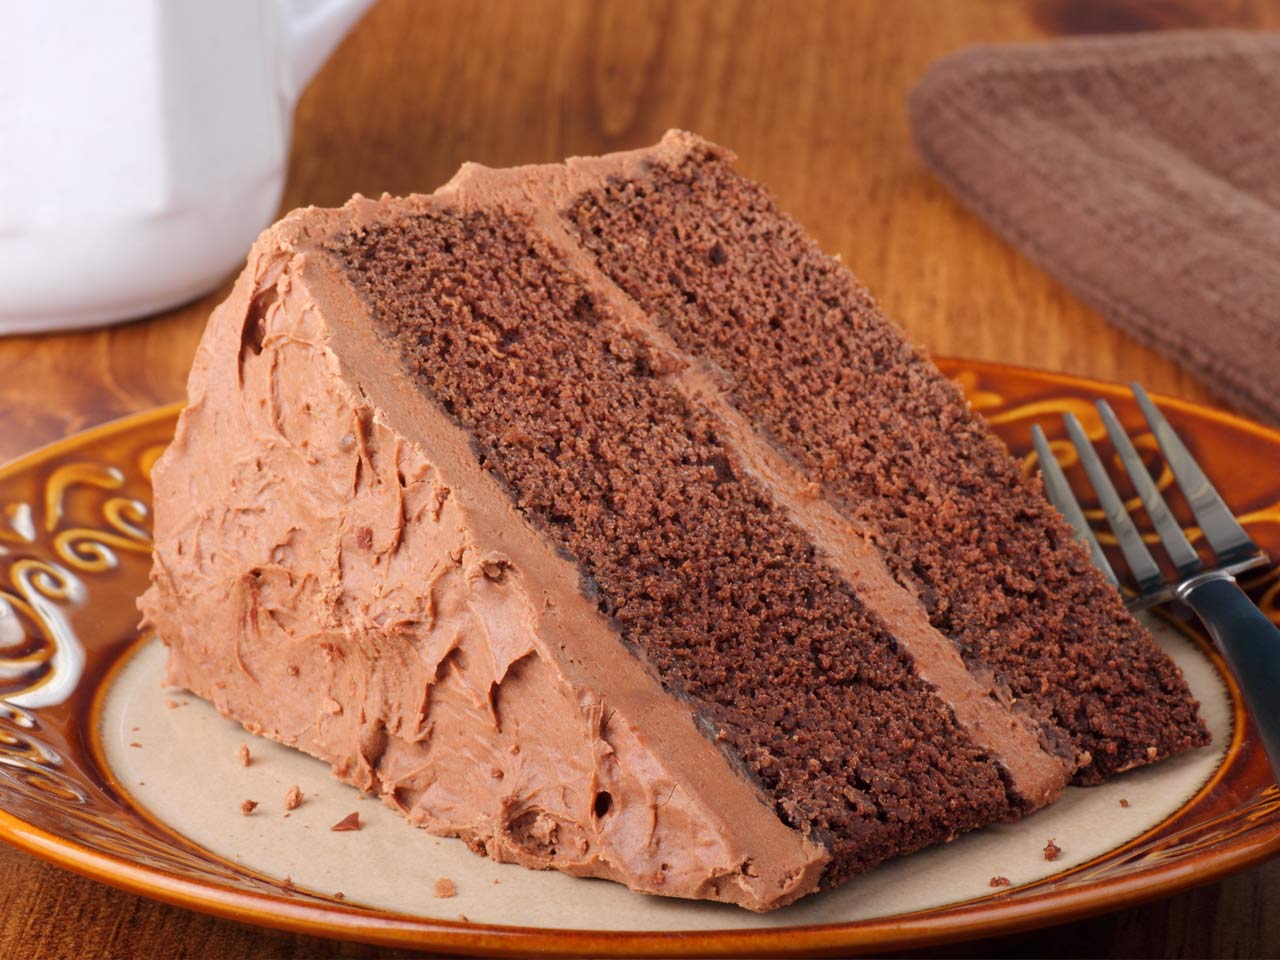 Easy chocolate cake